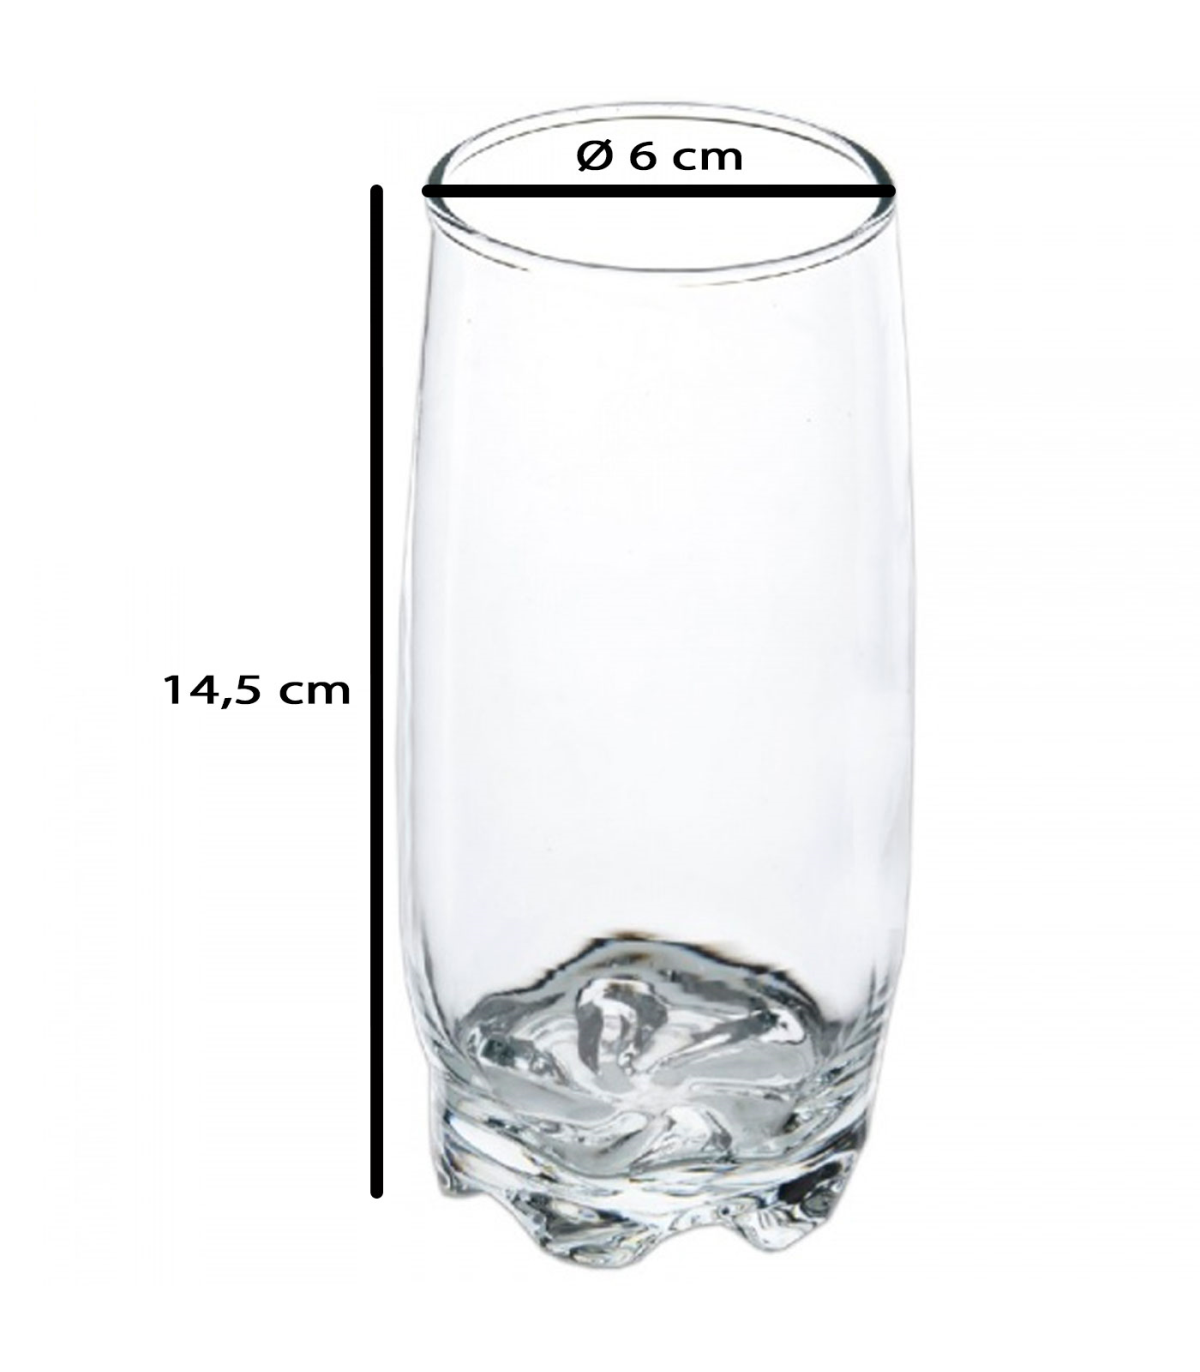 Set De Vasos De Cristal Elegantes Para Tus Bebidas Favoritas